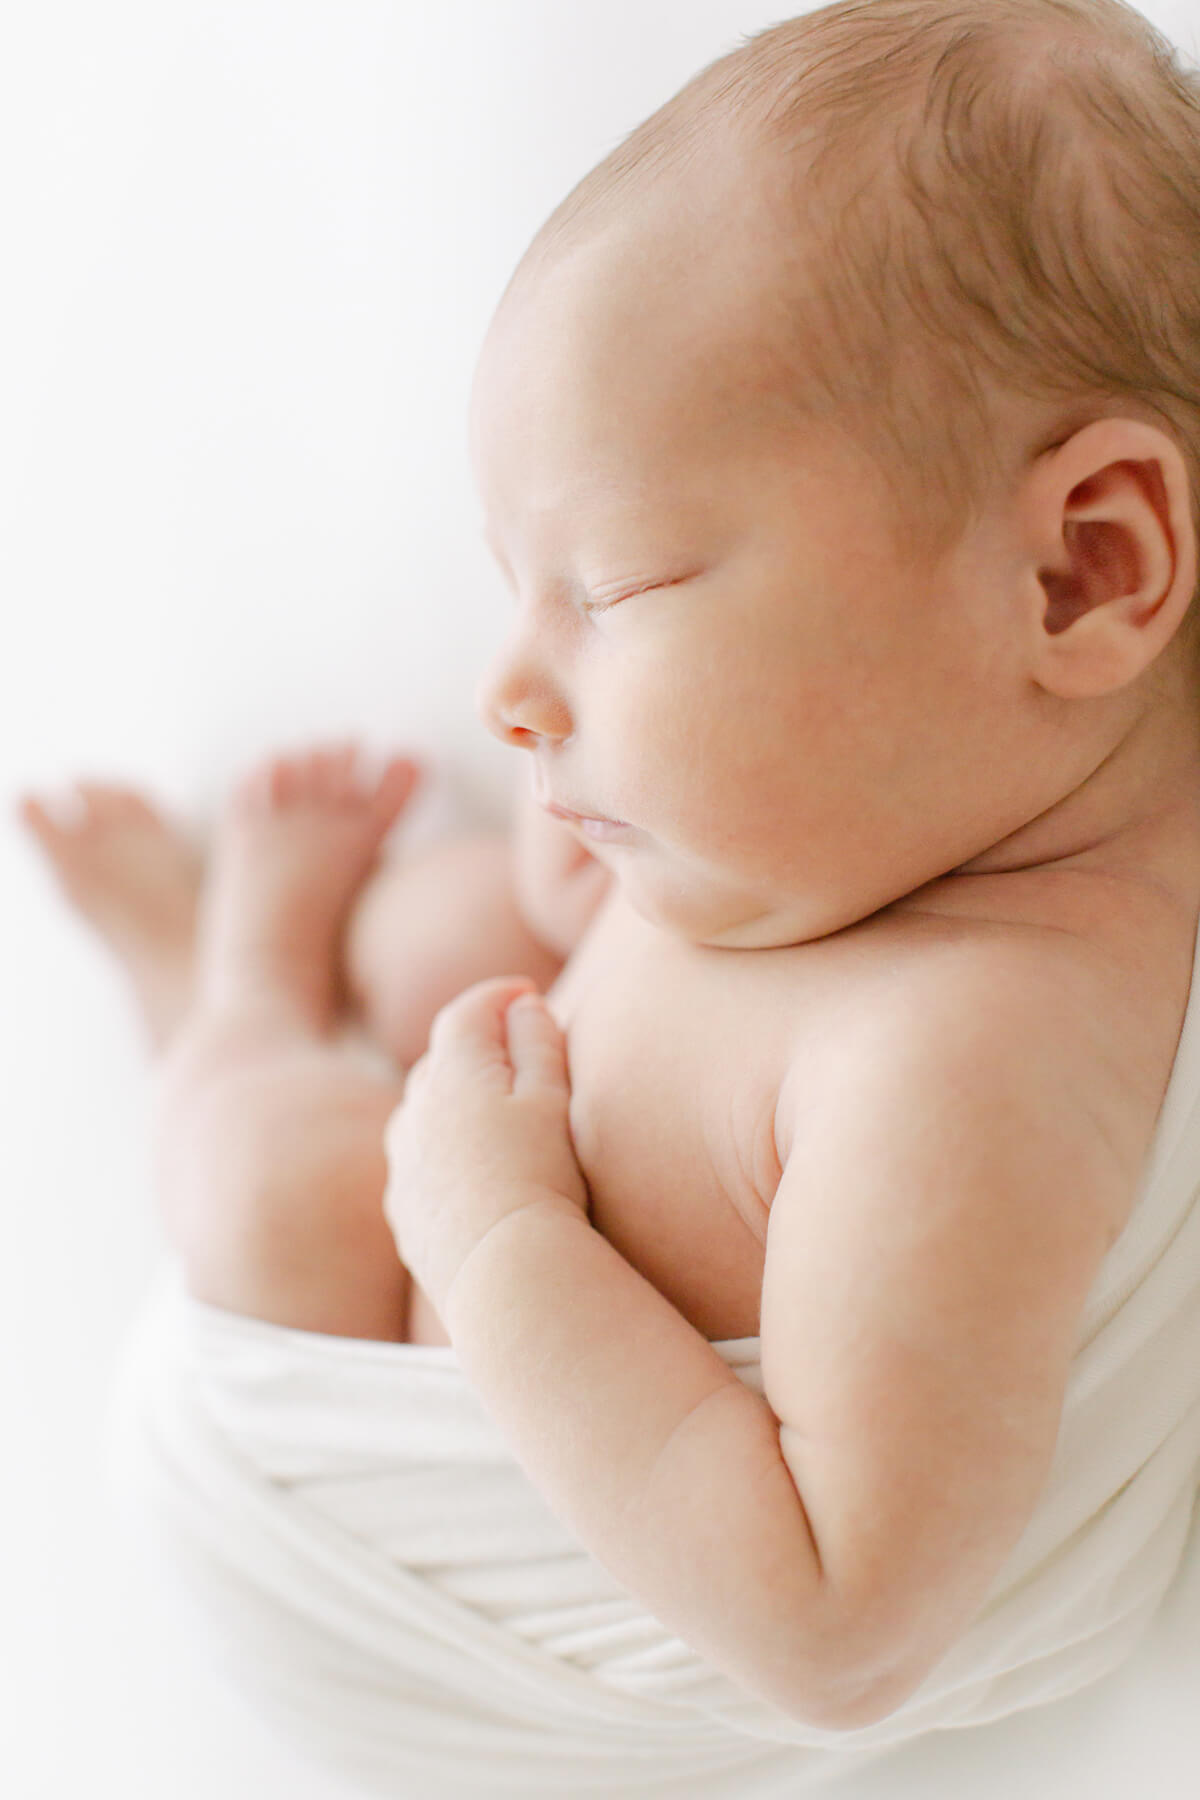 newborn baby sleeps as photographer Virginia Schultz gets detailed images